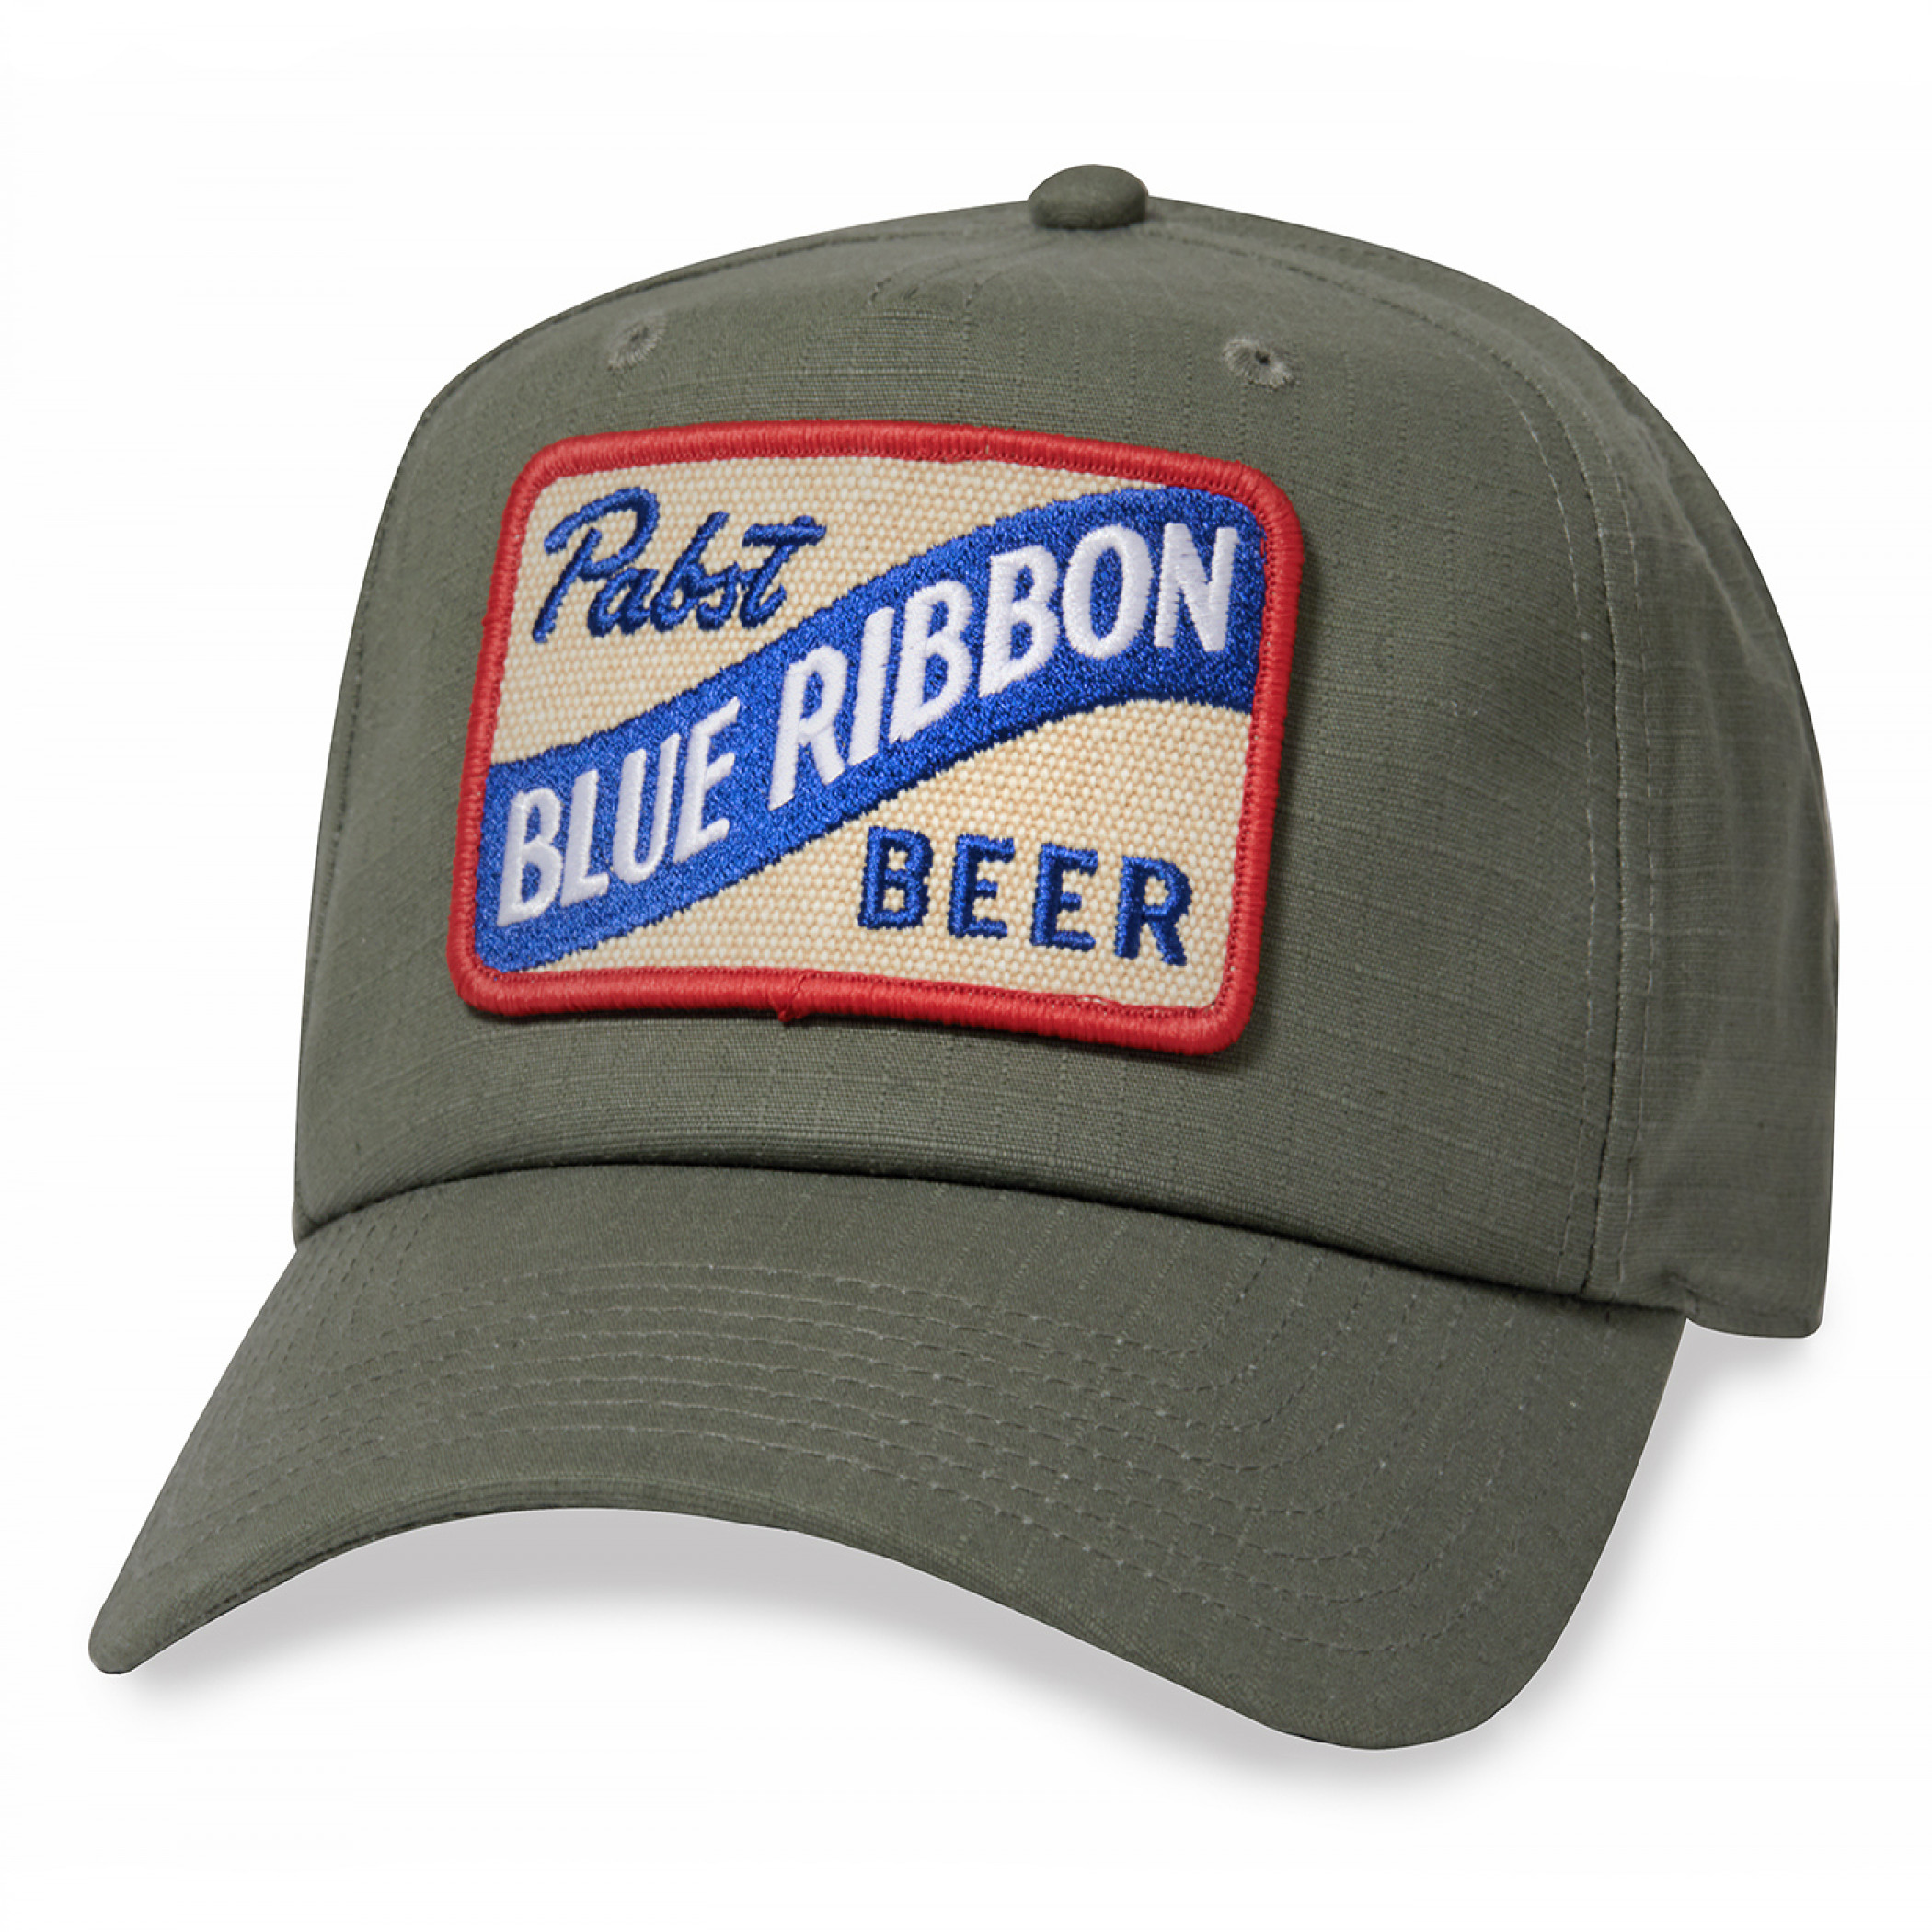 Pabst Blue Ribbon Beer Surplus Style Hat